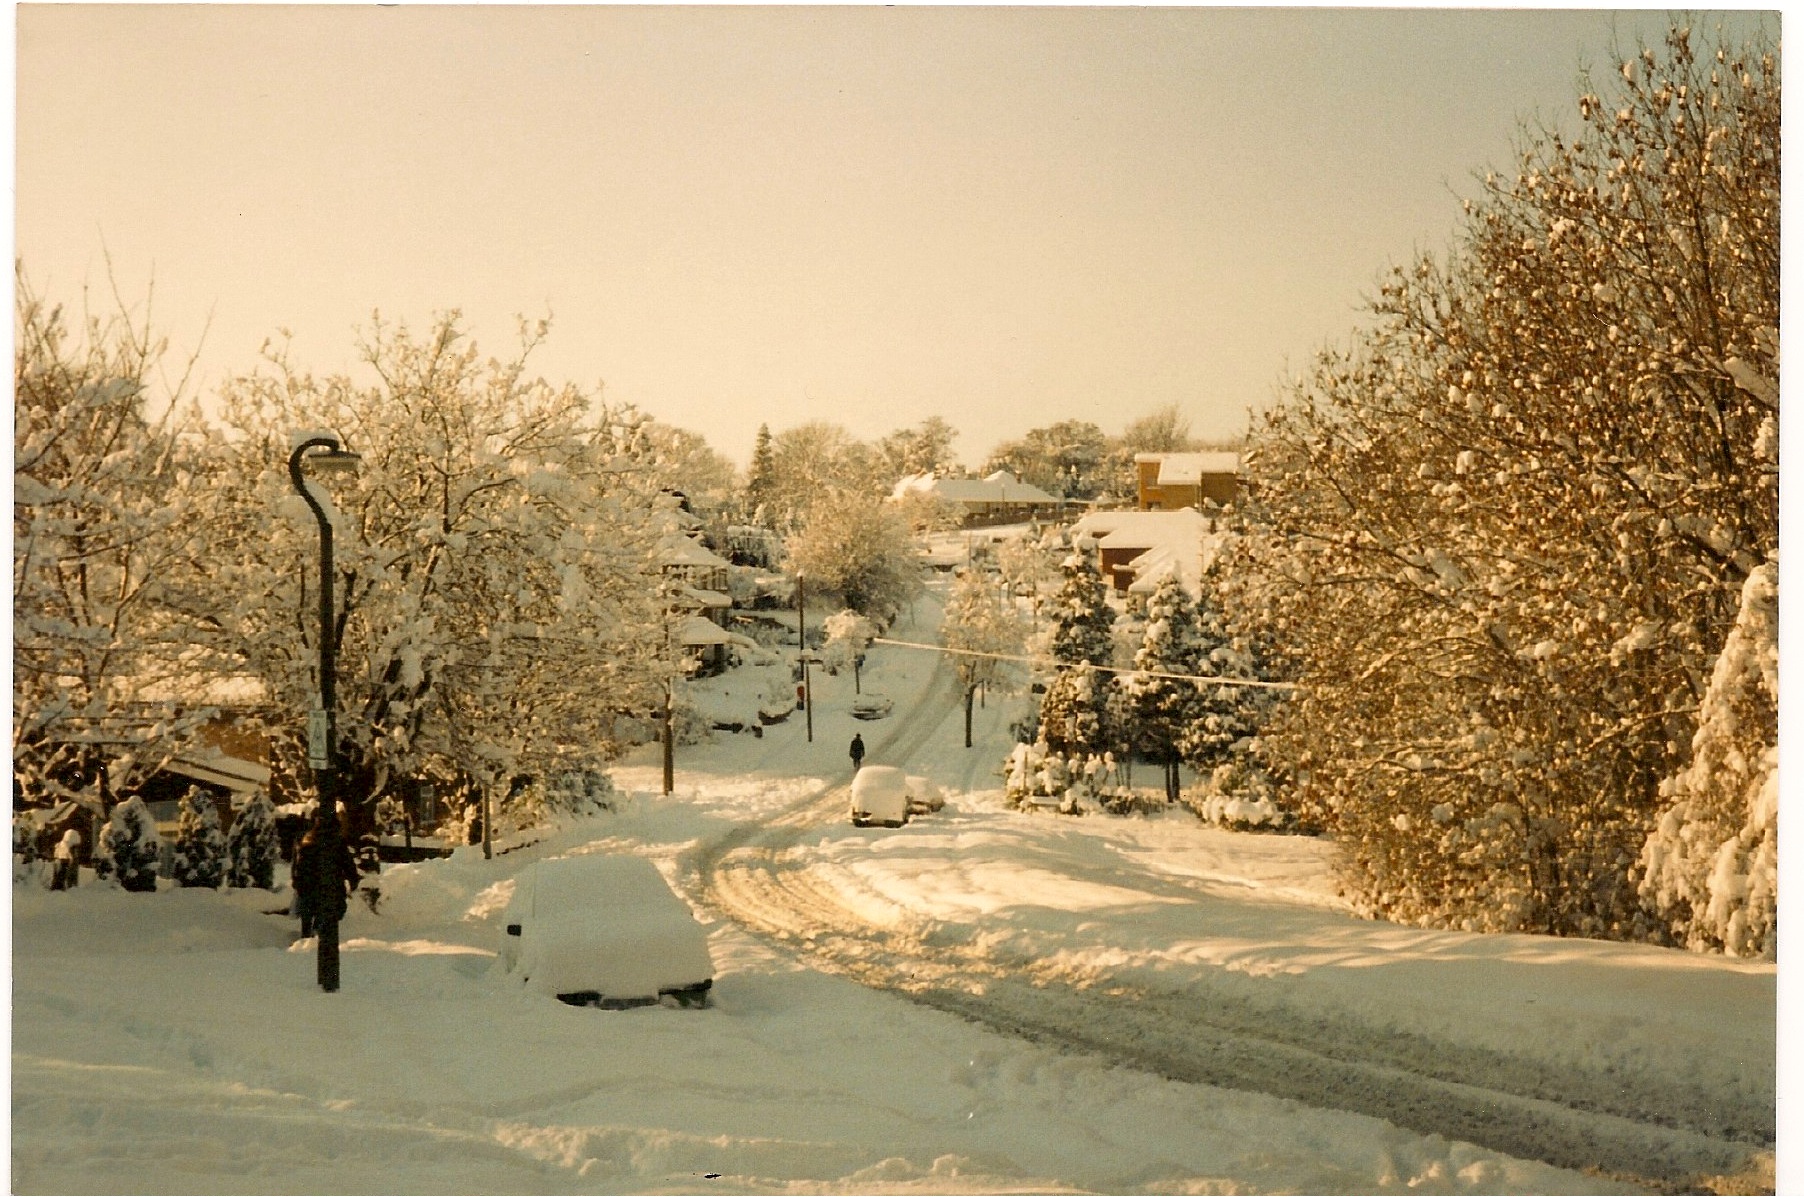 1987 Snow - Looking down Hempstead Hill towards Hempstead. Spekes Road to the left in the dip